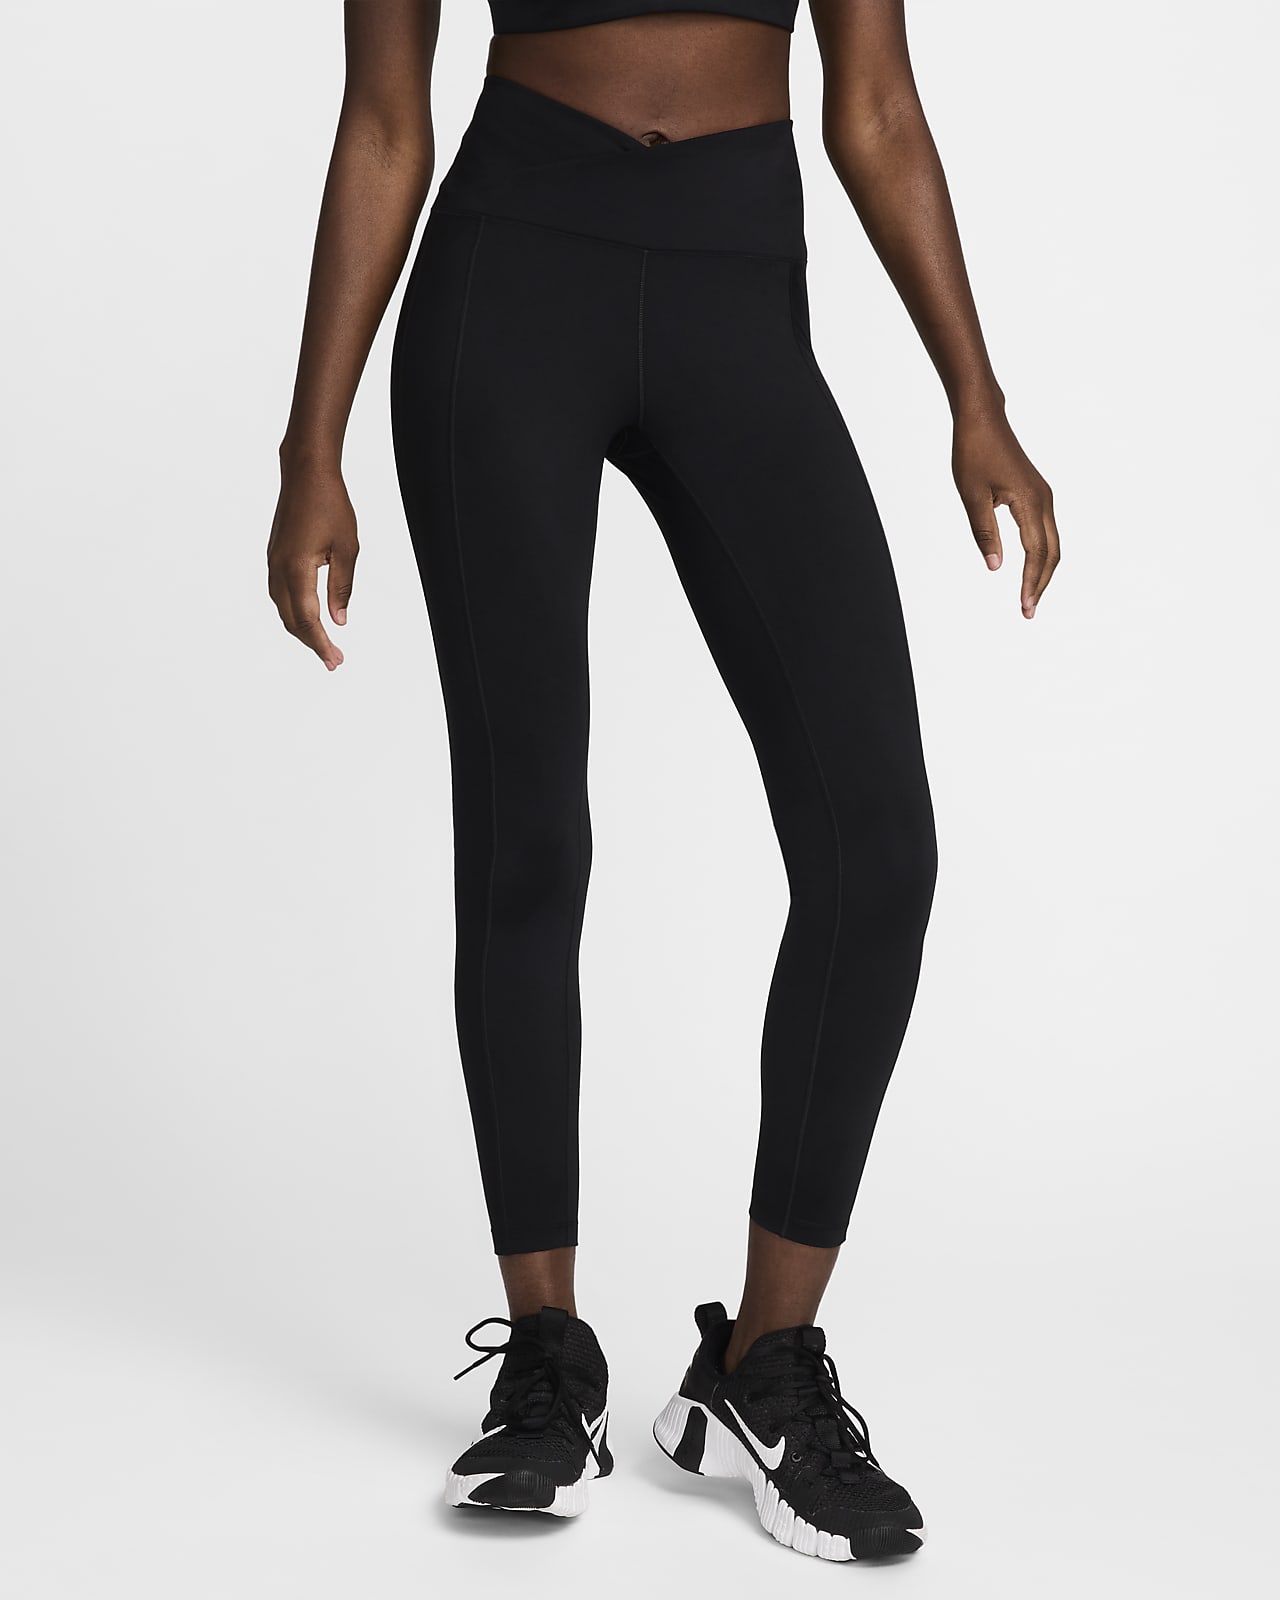 Nike One Wrap Women's High-Waisted 7/8 Leggings